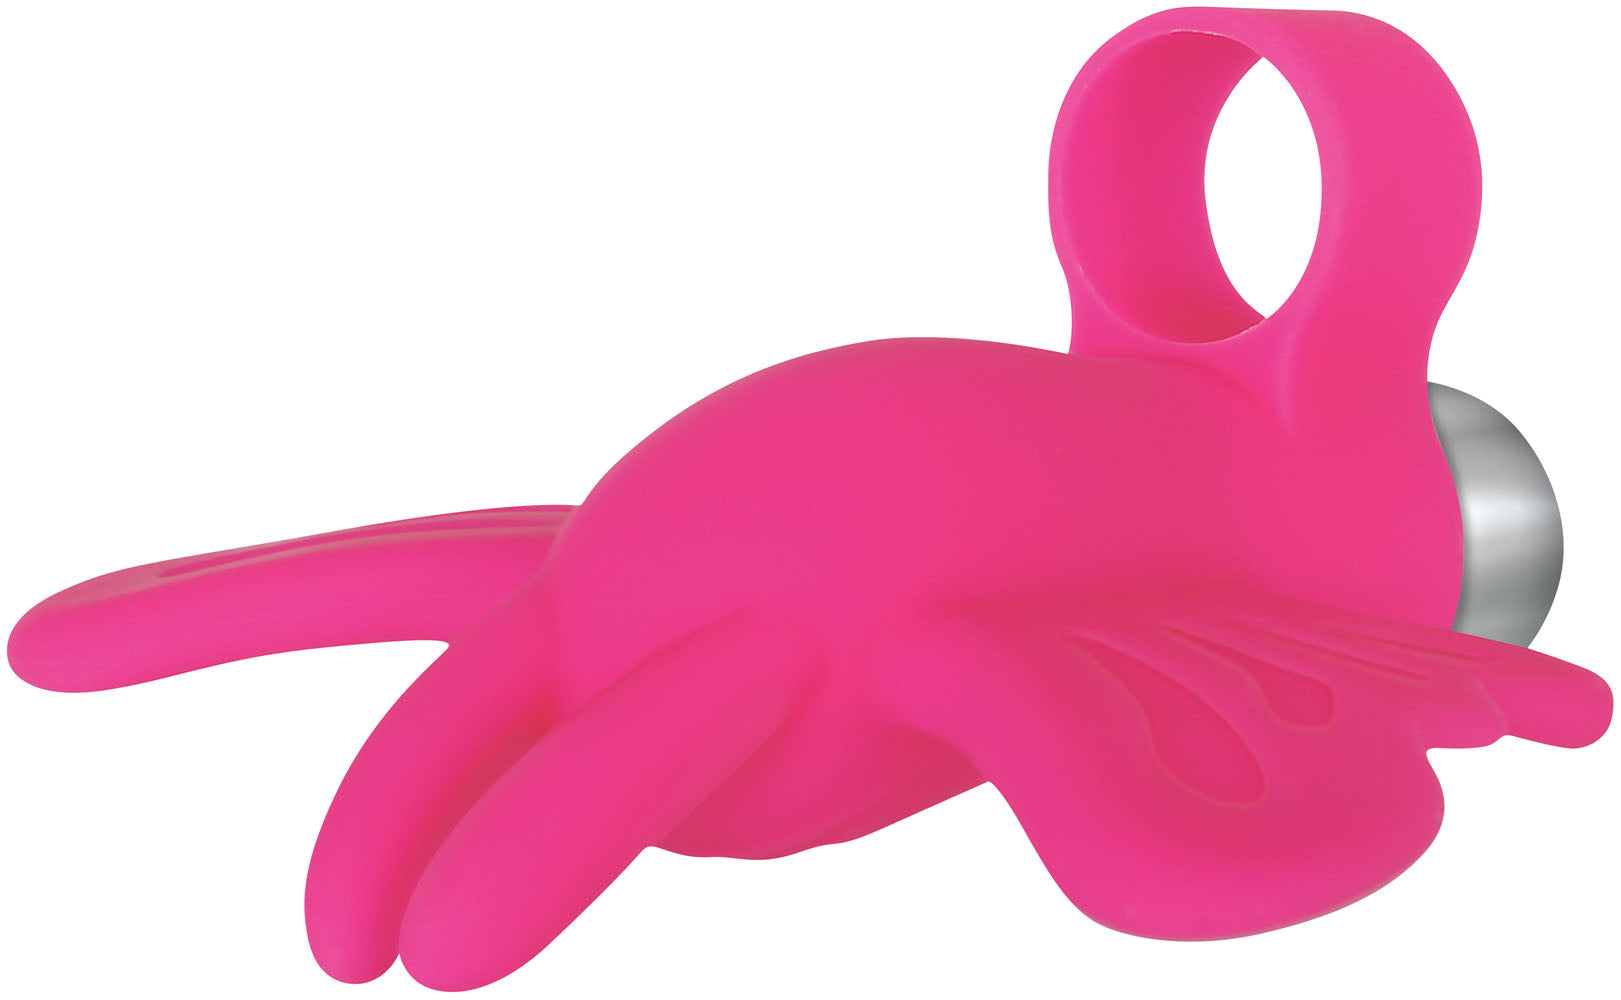 Evolved Novelties Finger Vibrator - My Butterfly Pink